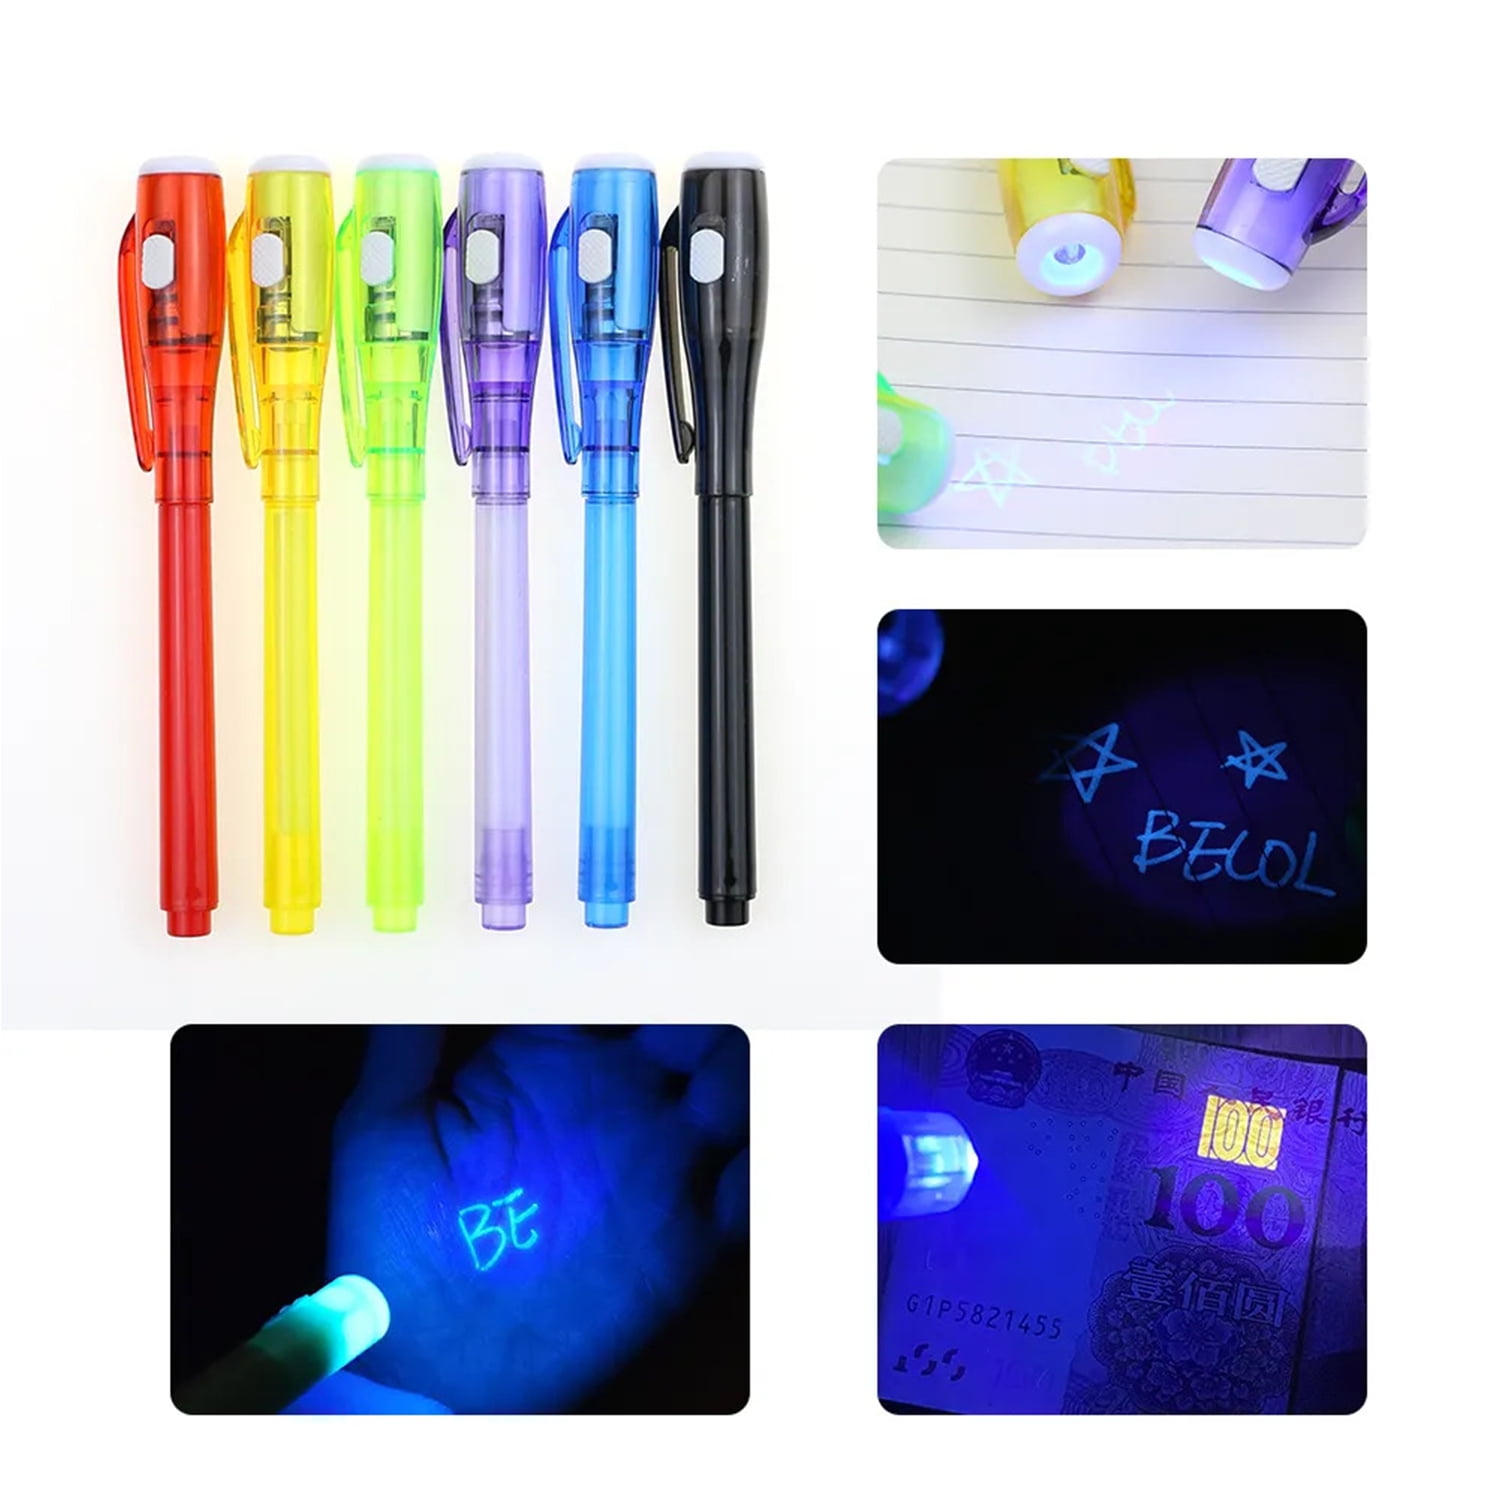 DazSpirit 16Pcs Invisible Ink Pen Set with UV Light, Mini Notepads & gift  Bags, Spy Pens for Kids, Top Secret Message Magic Mark